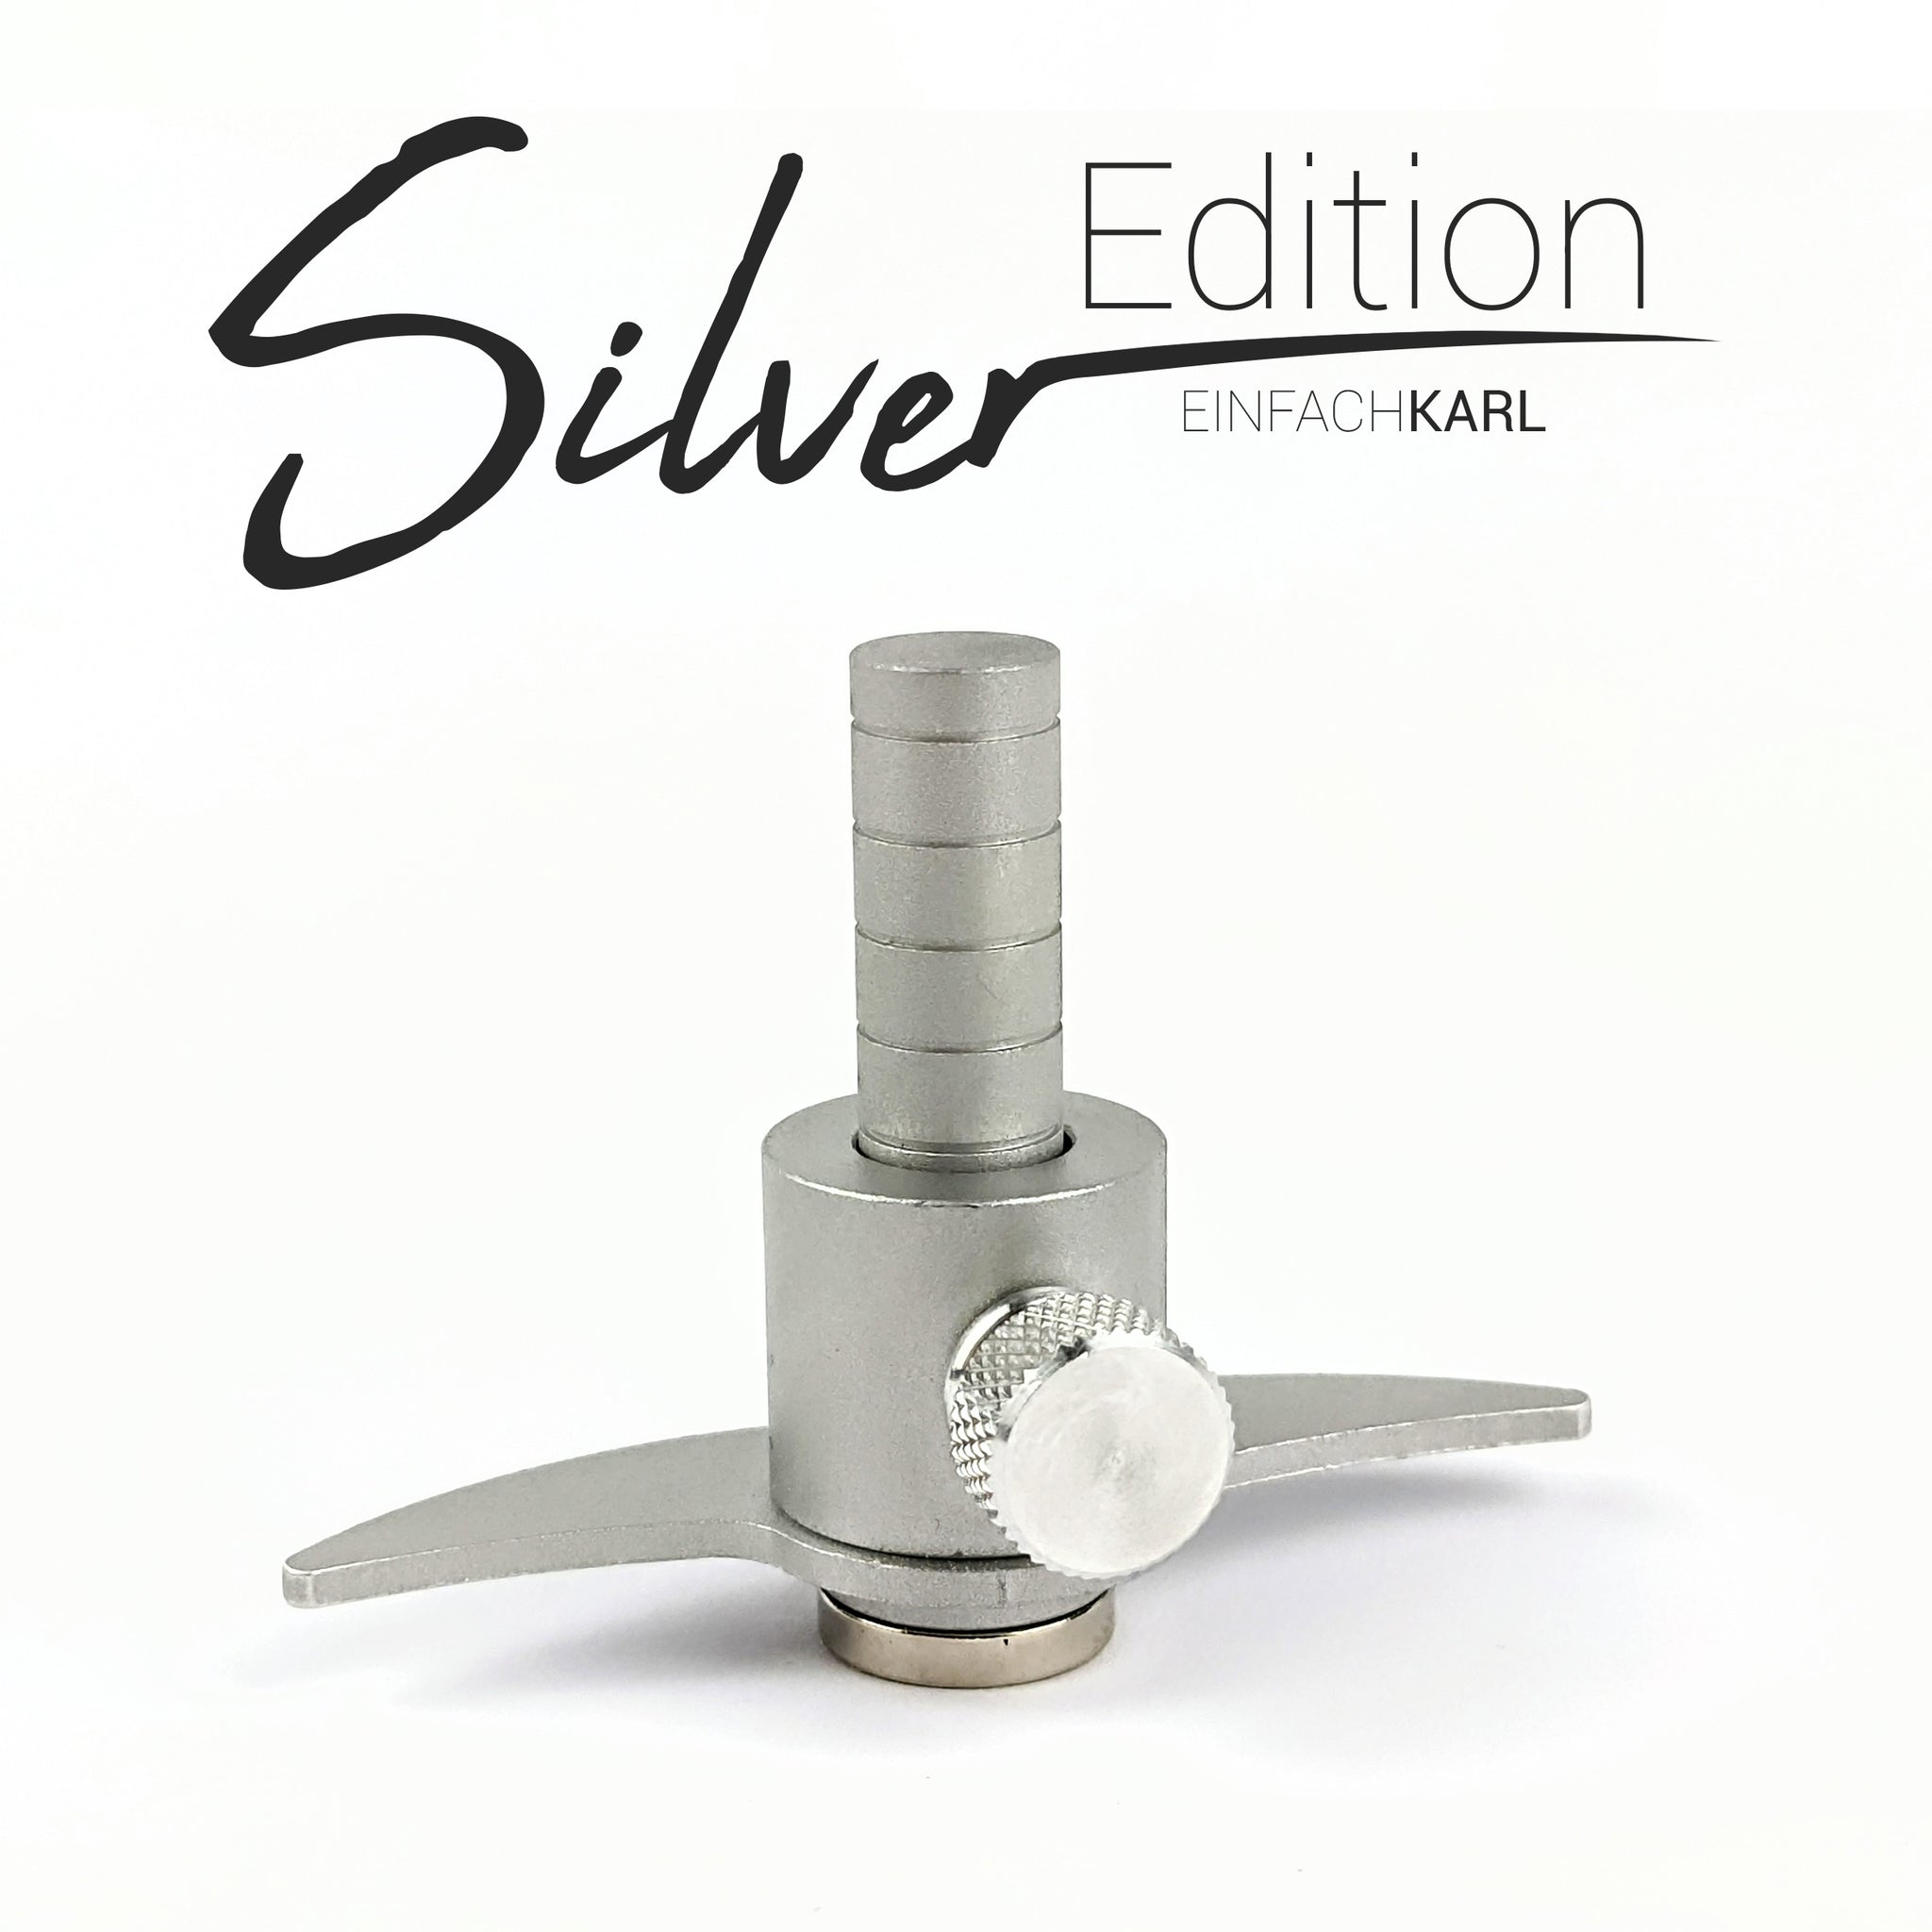 Little Karl Silver Edition